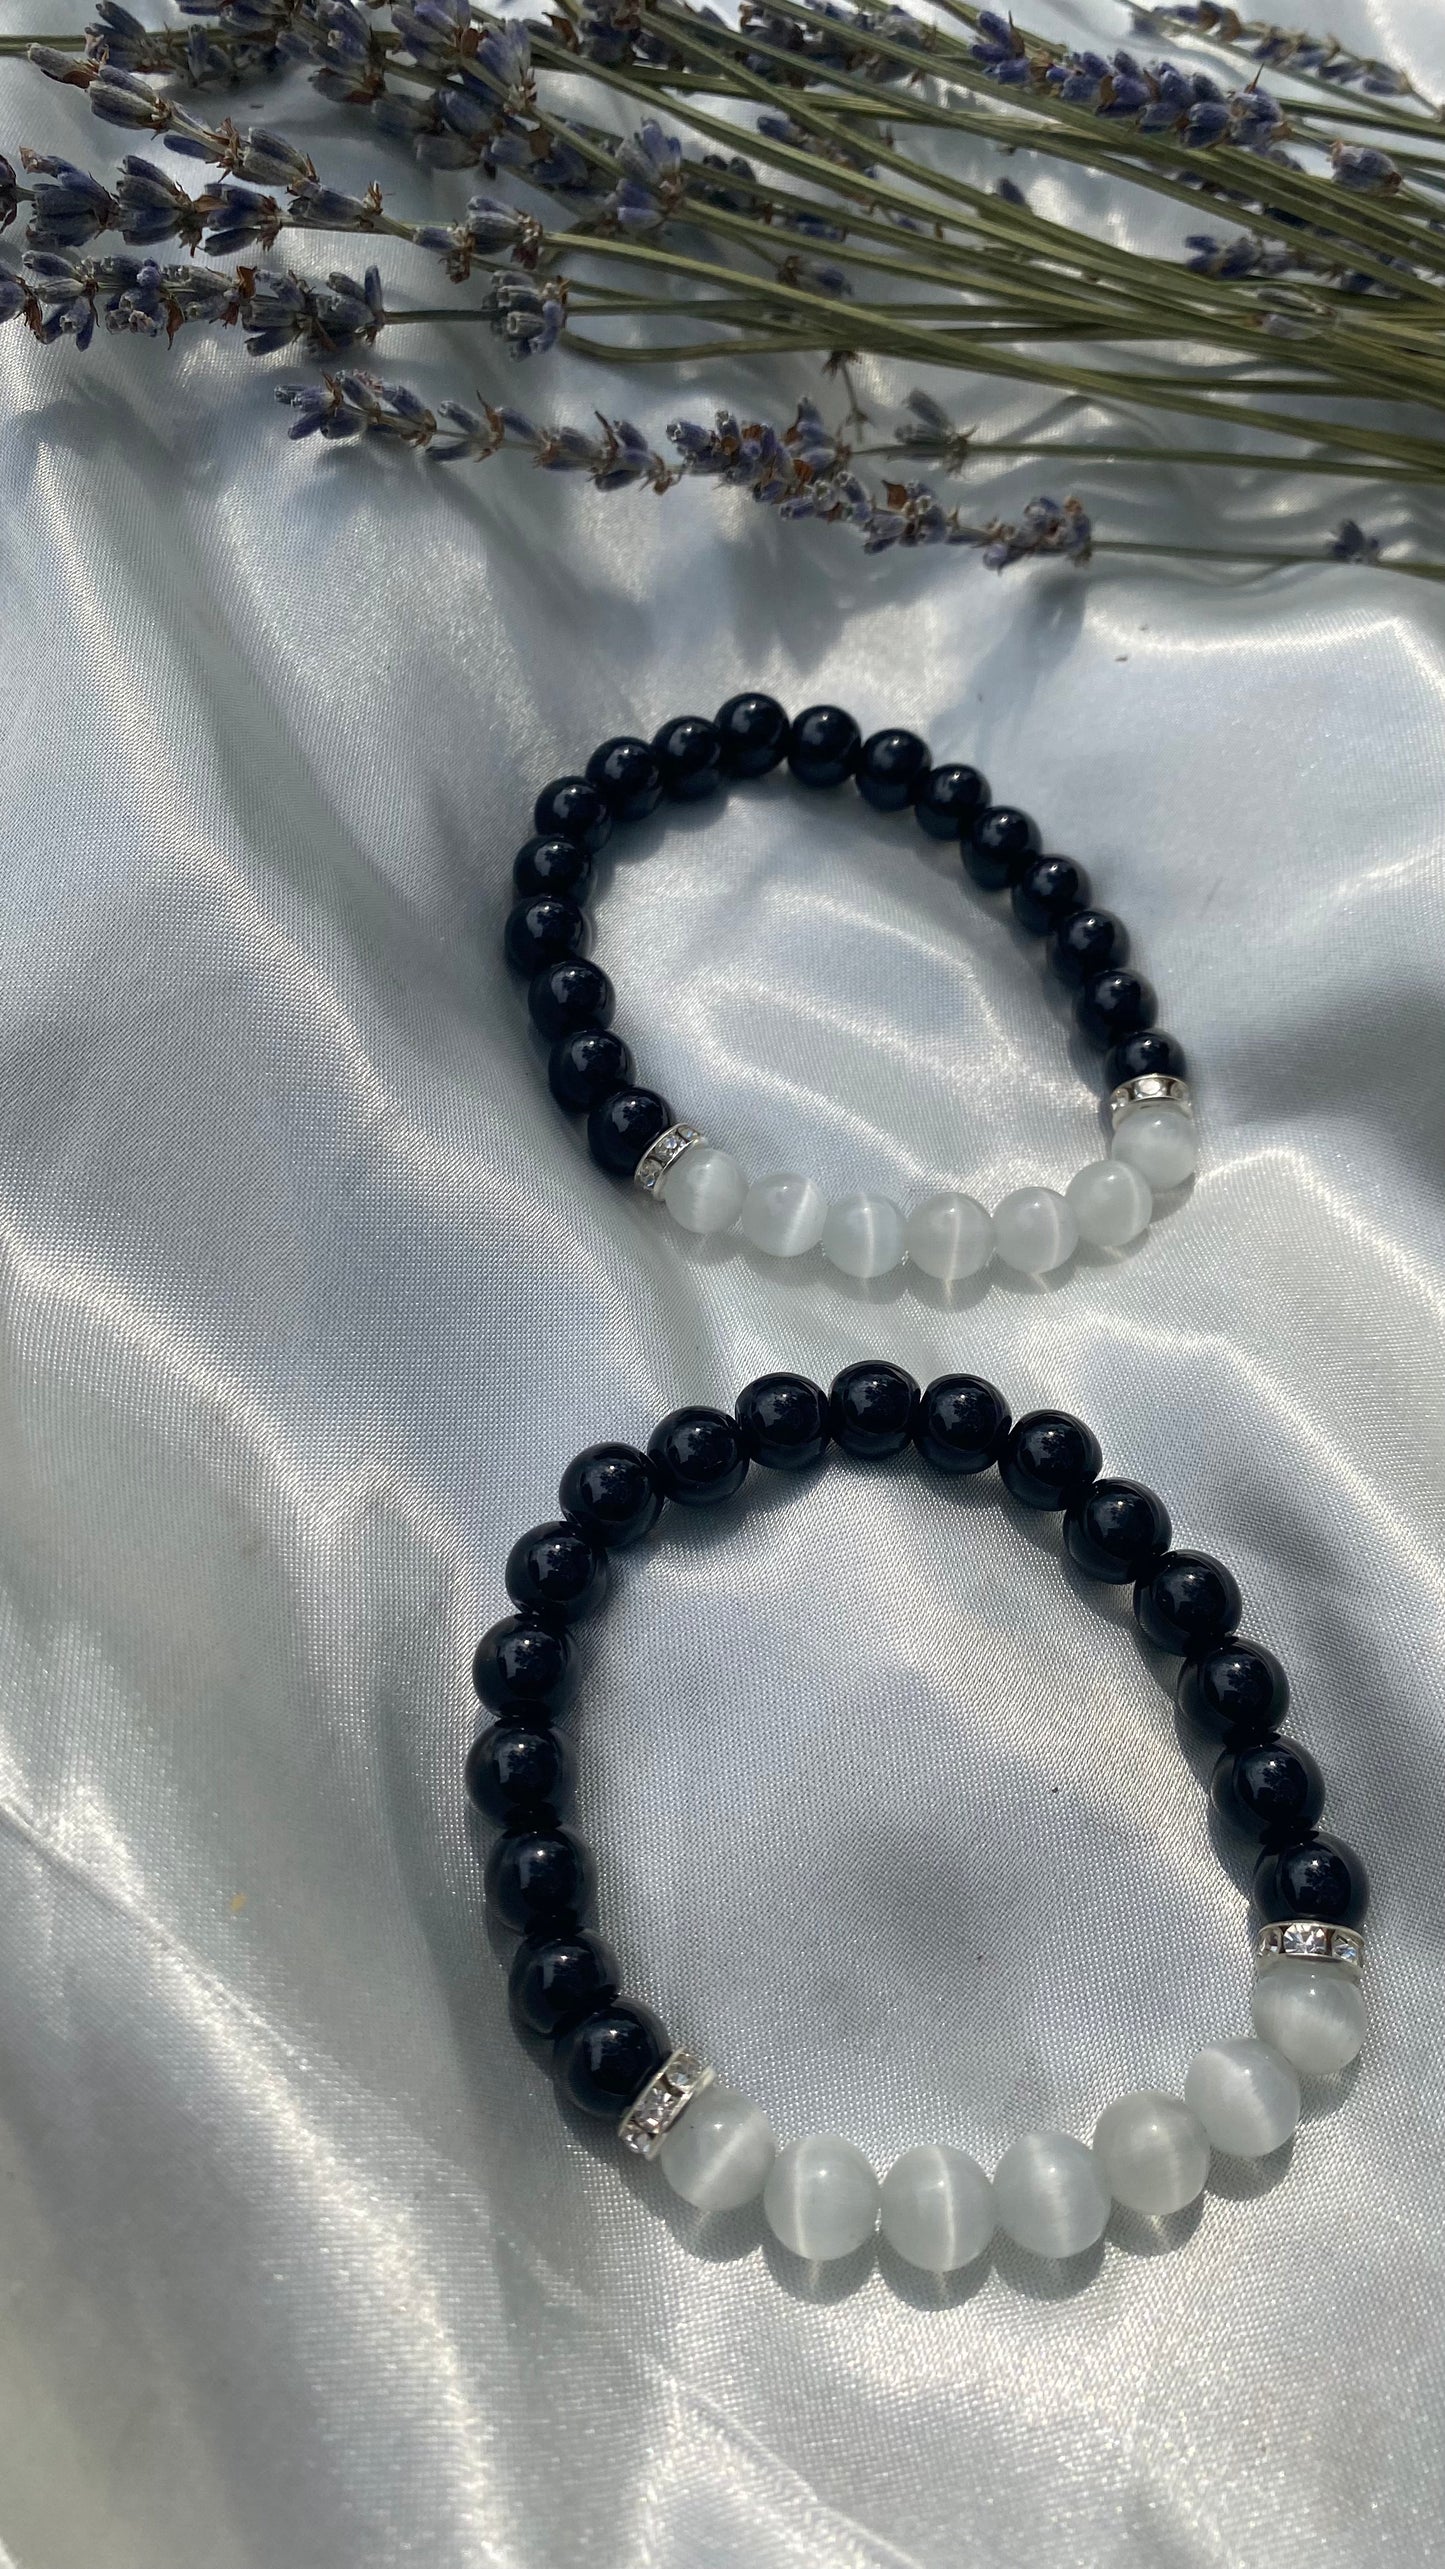 Black obsidian + selenite bracelet